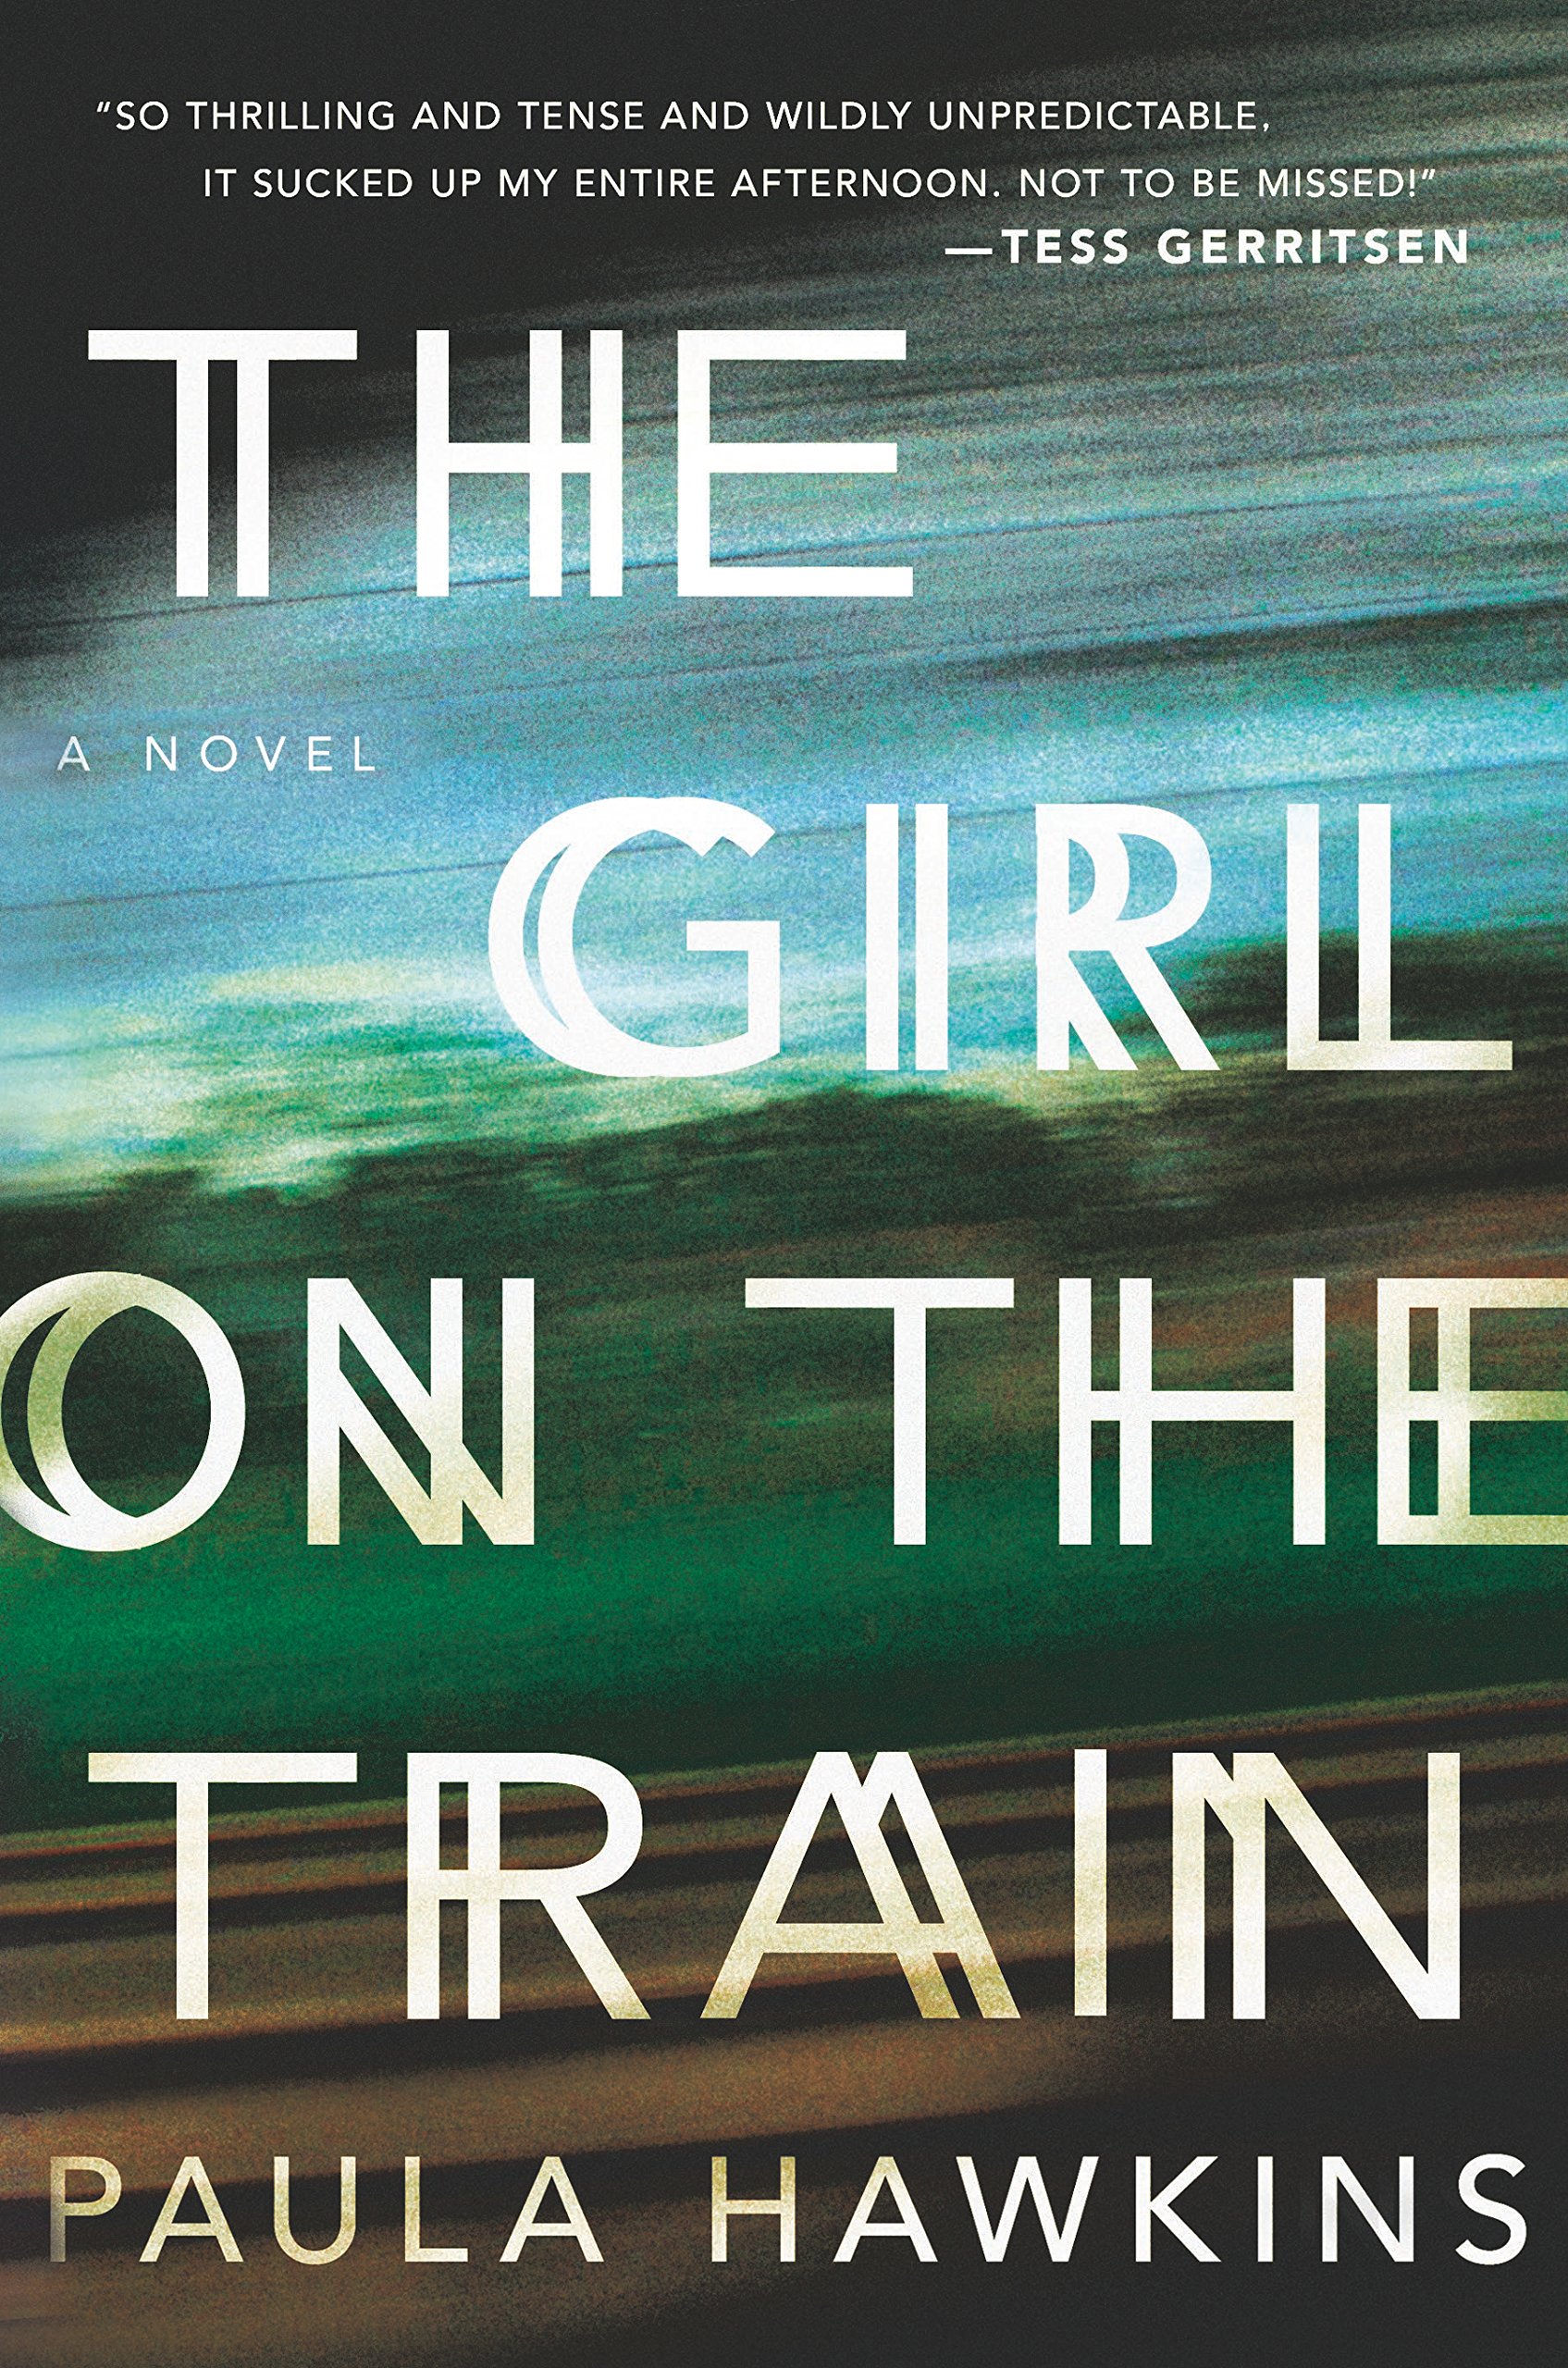 Fun Books To Read: The Girl on the Train